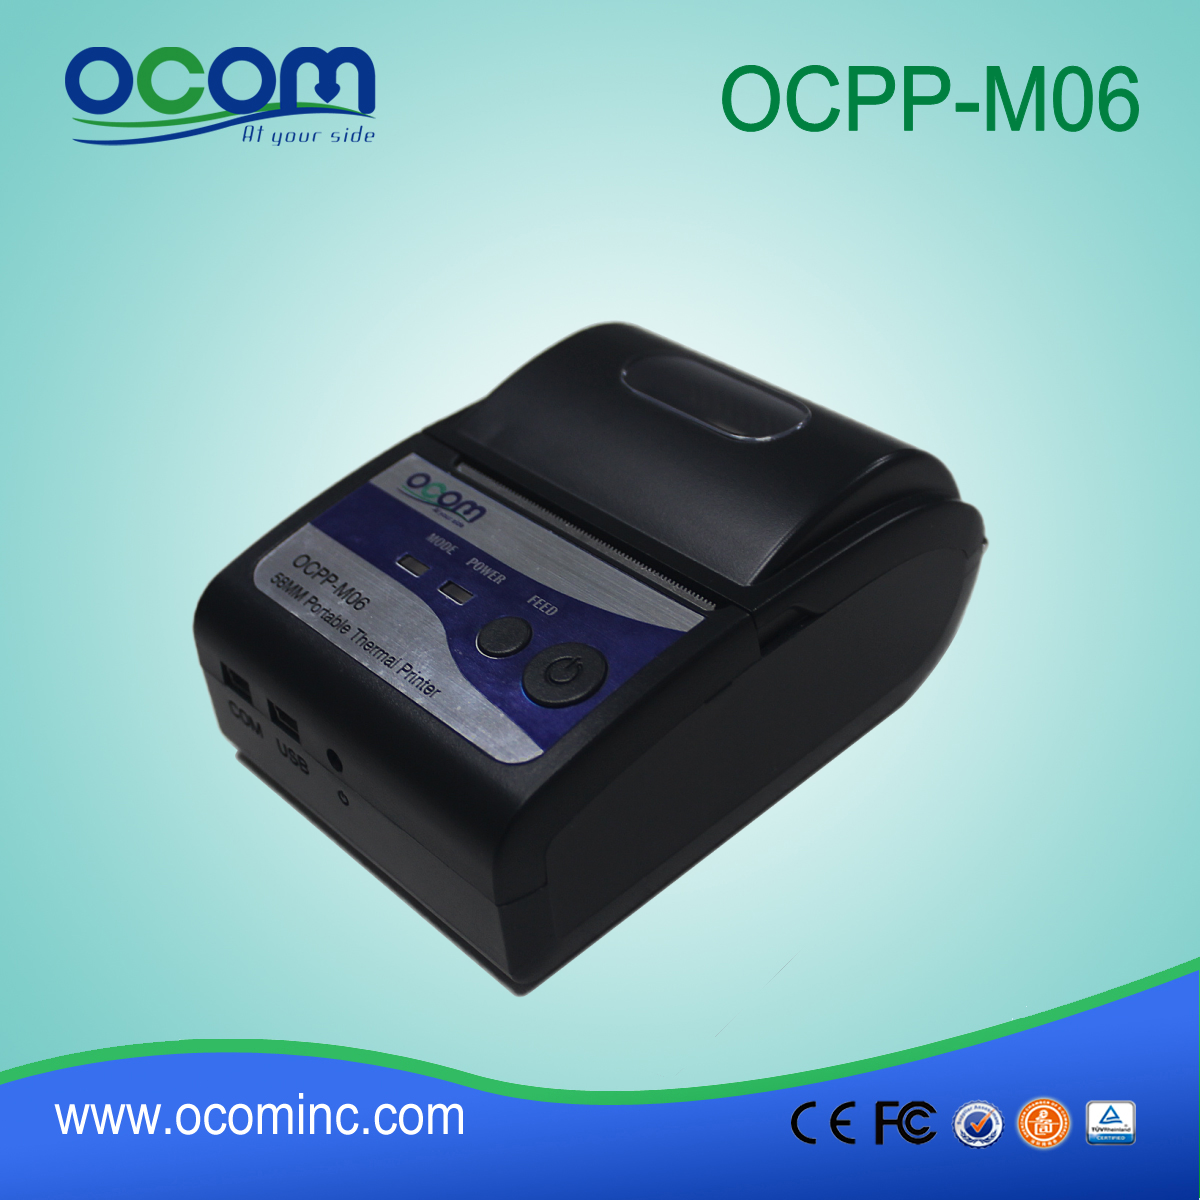 (OCPP-M06) OCOM ζεστό πώλησης 58MM χρέωσης μηχάνημα για σούπερ μάρκετ